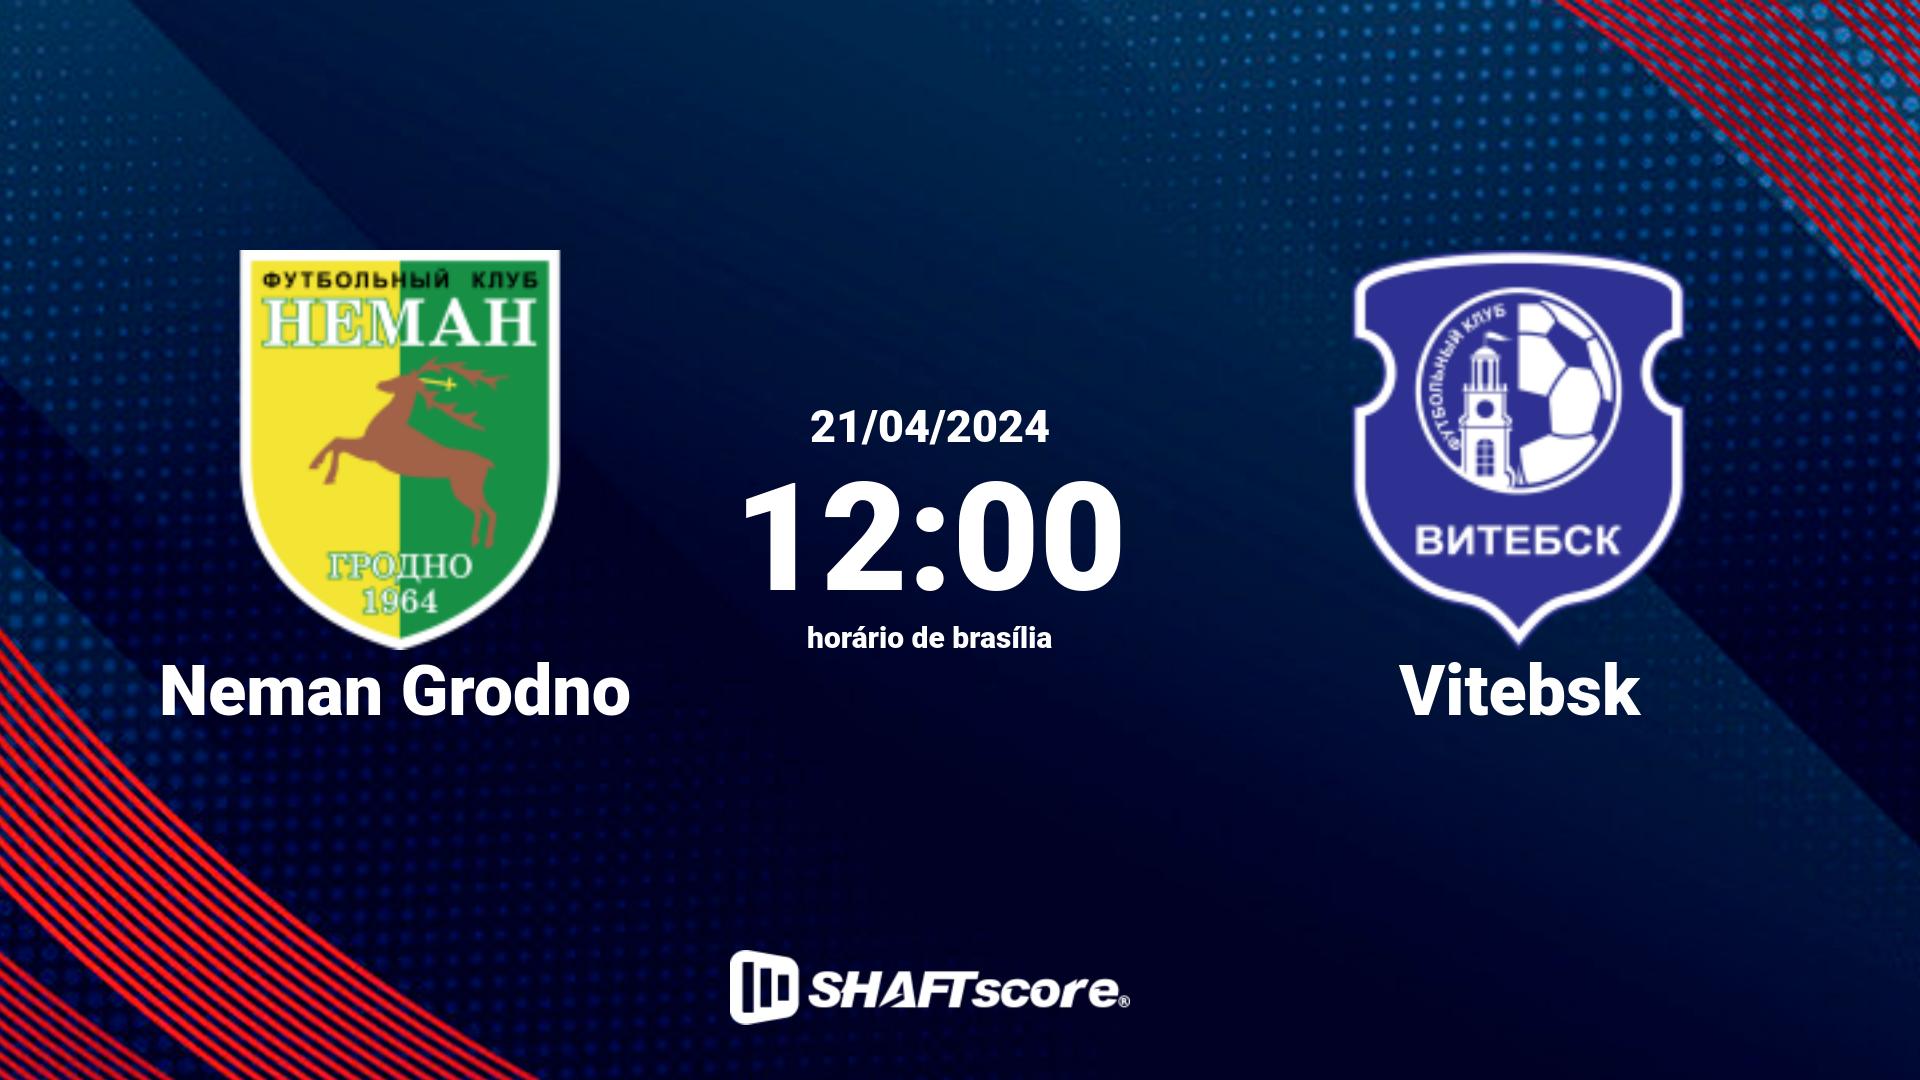 Estatísticas do jogo Neman Grodno vs Vitebsk 21.04 12:00